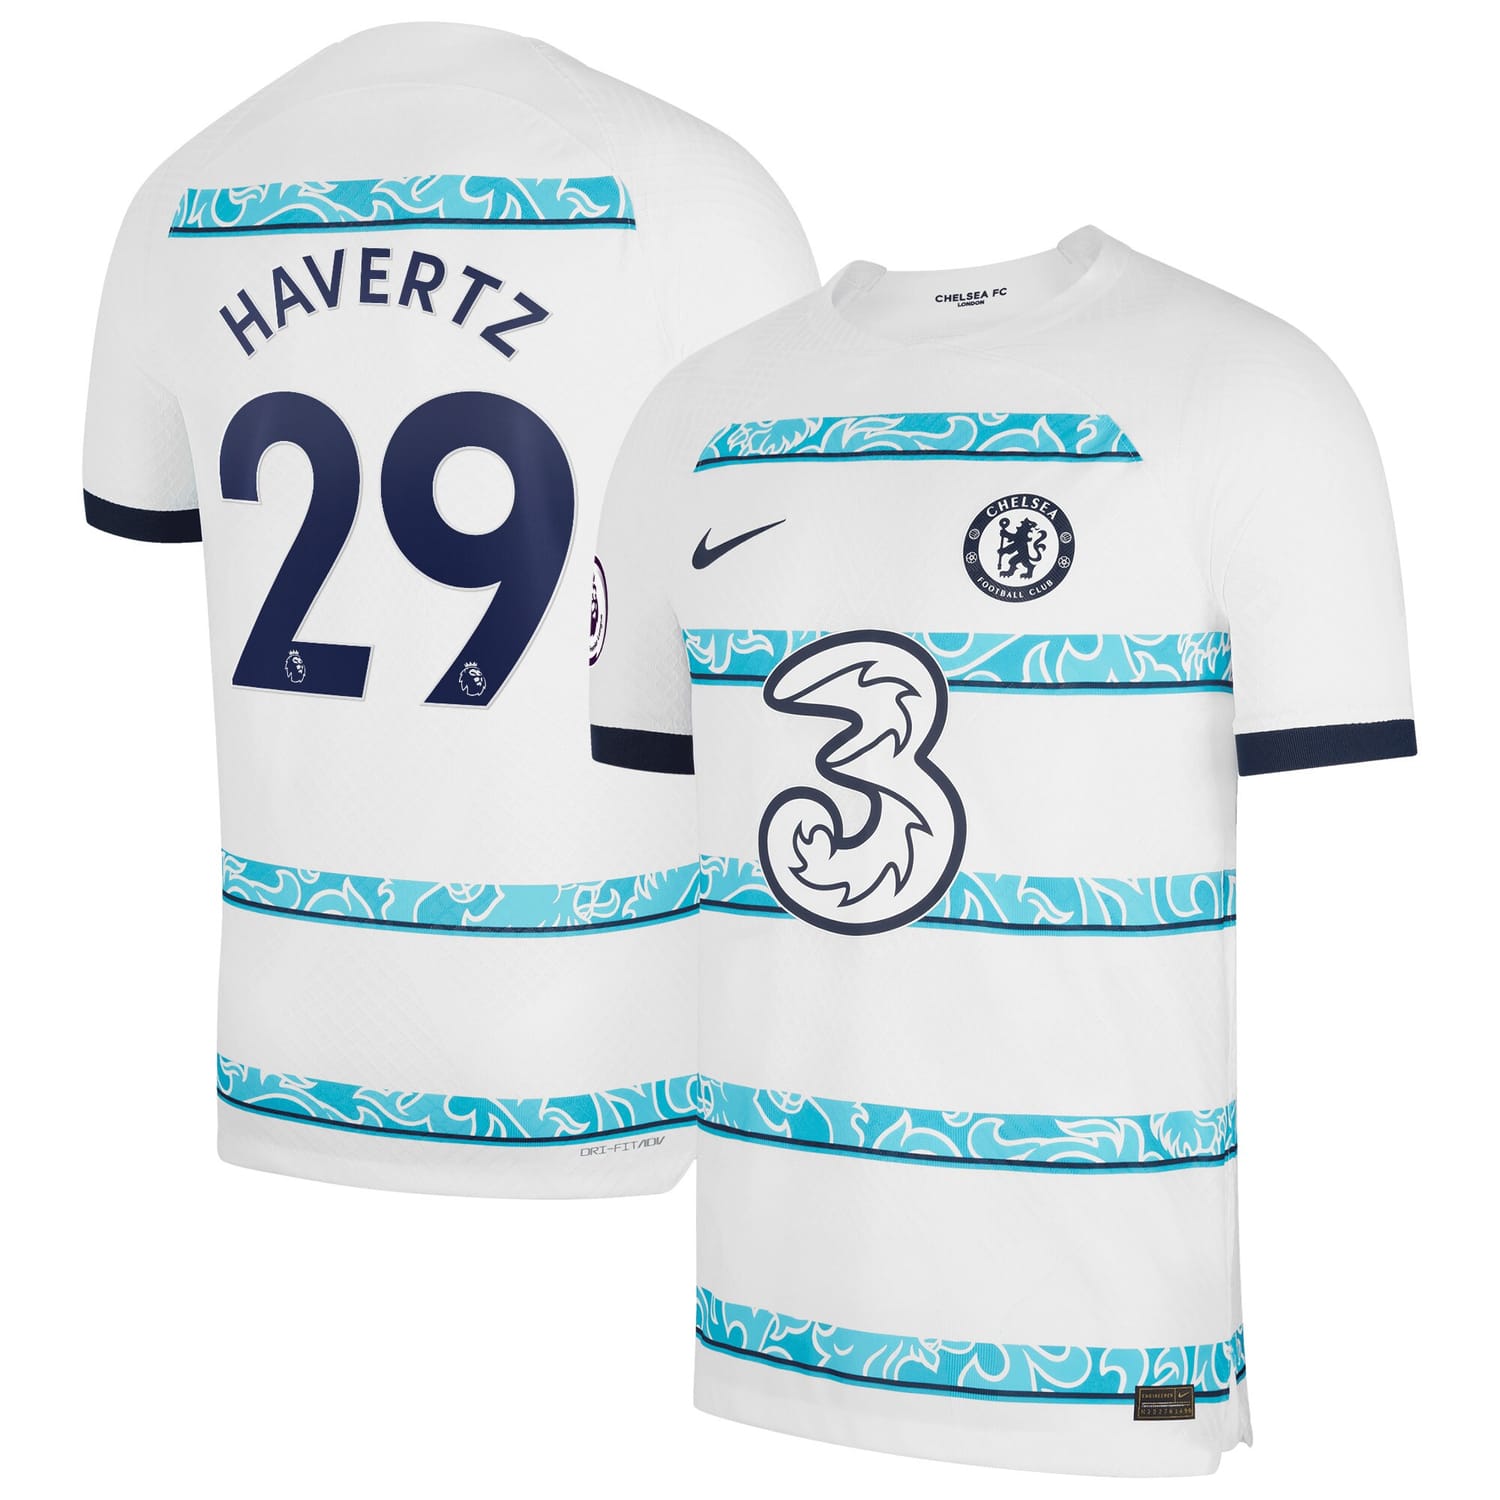 Premier League Chelsea Away Authentic Jersey Shirt White 2022-23 player Kai Havertz printing for Men